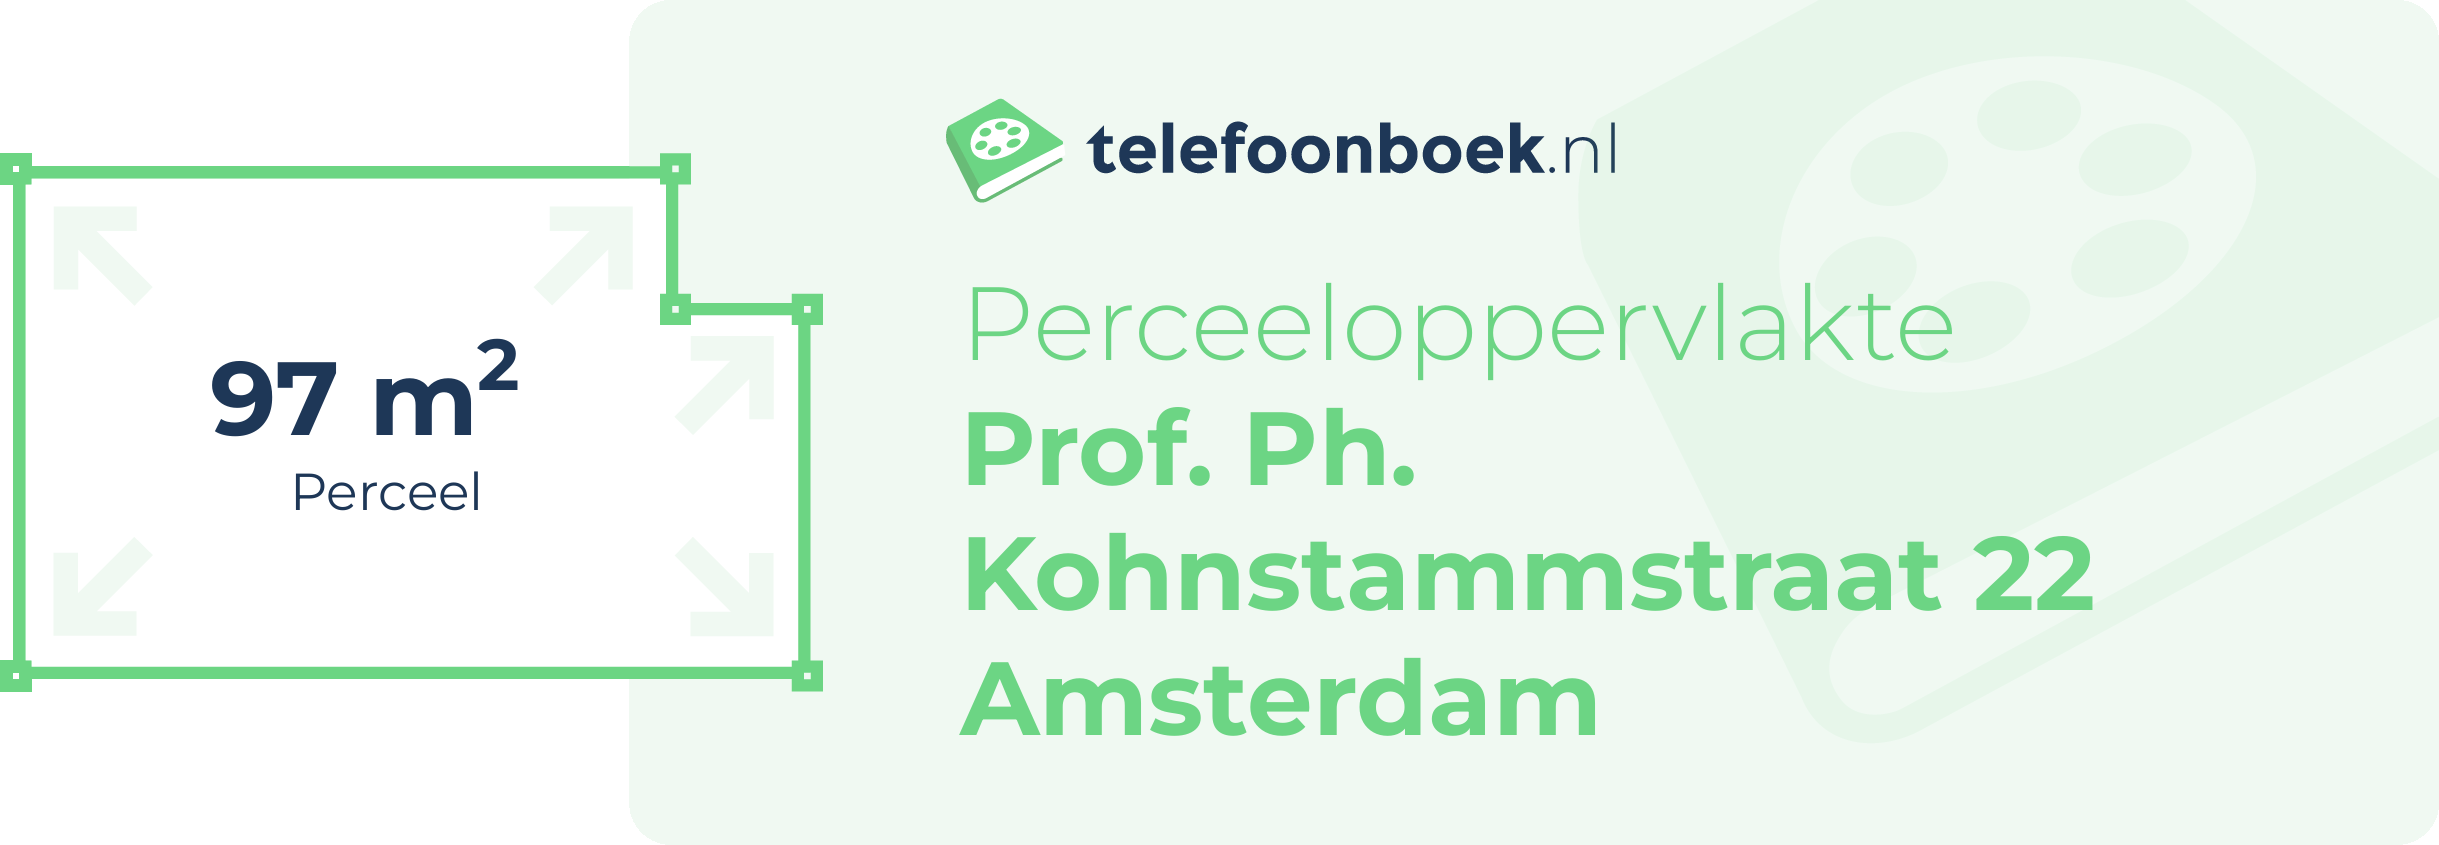 Perceeloppervlakte Prof. Ph. Kohnstammstraat 22 Amsterdam